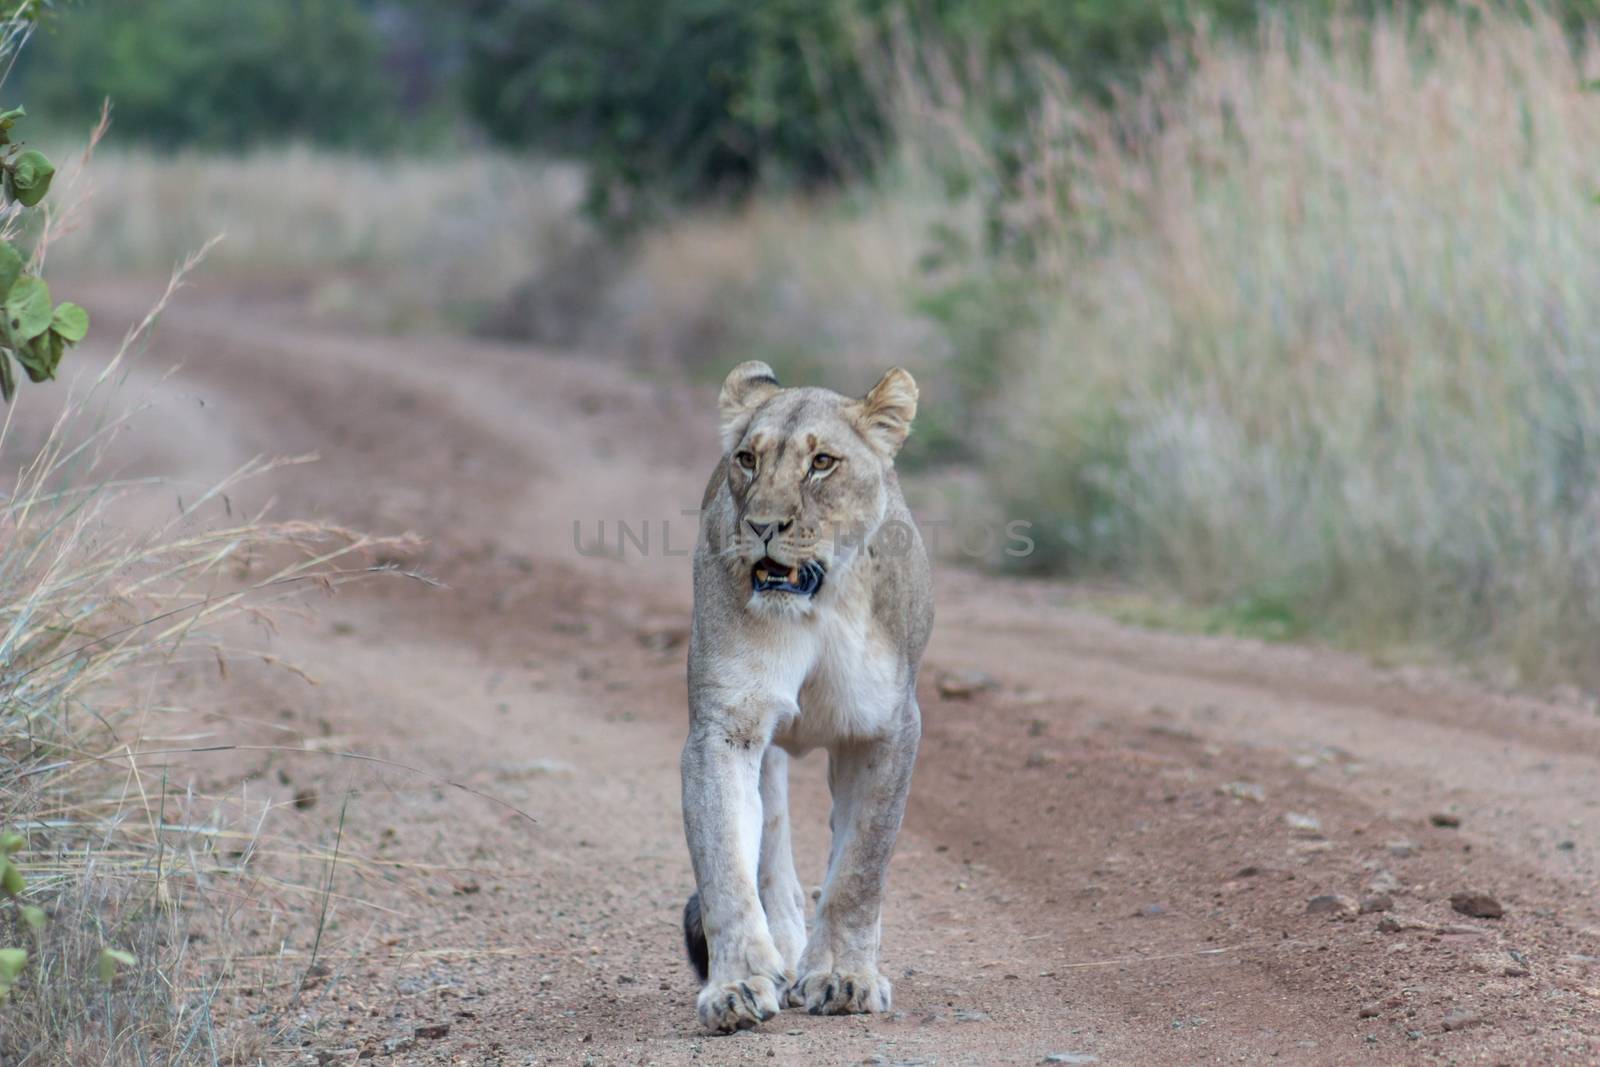 Lioness walking on a dirt road by RiaanAlbrecht